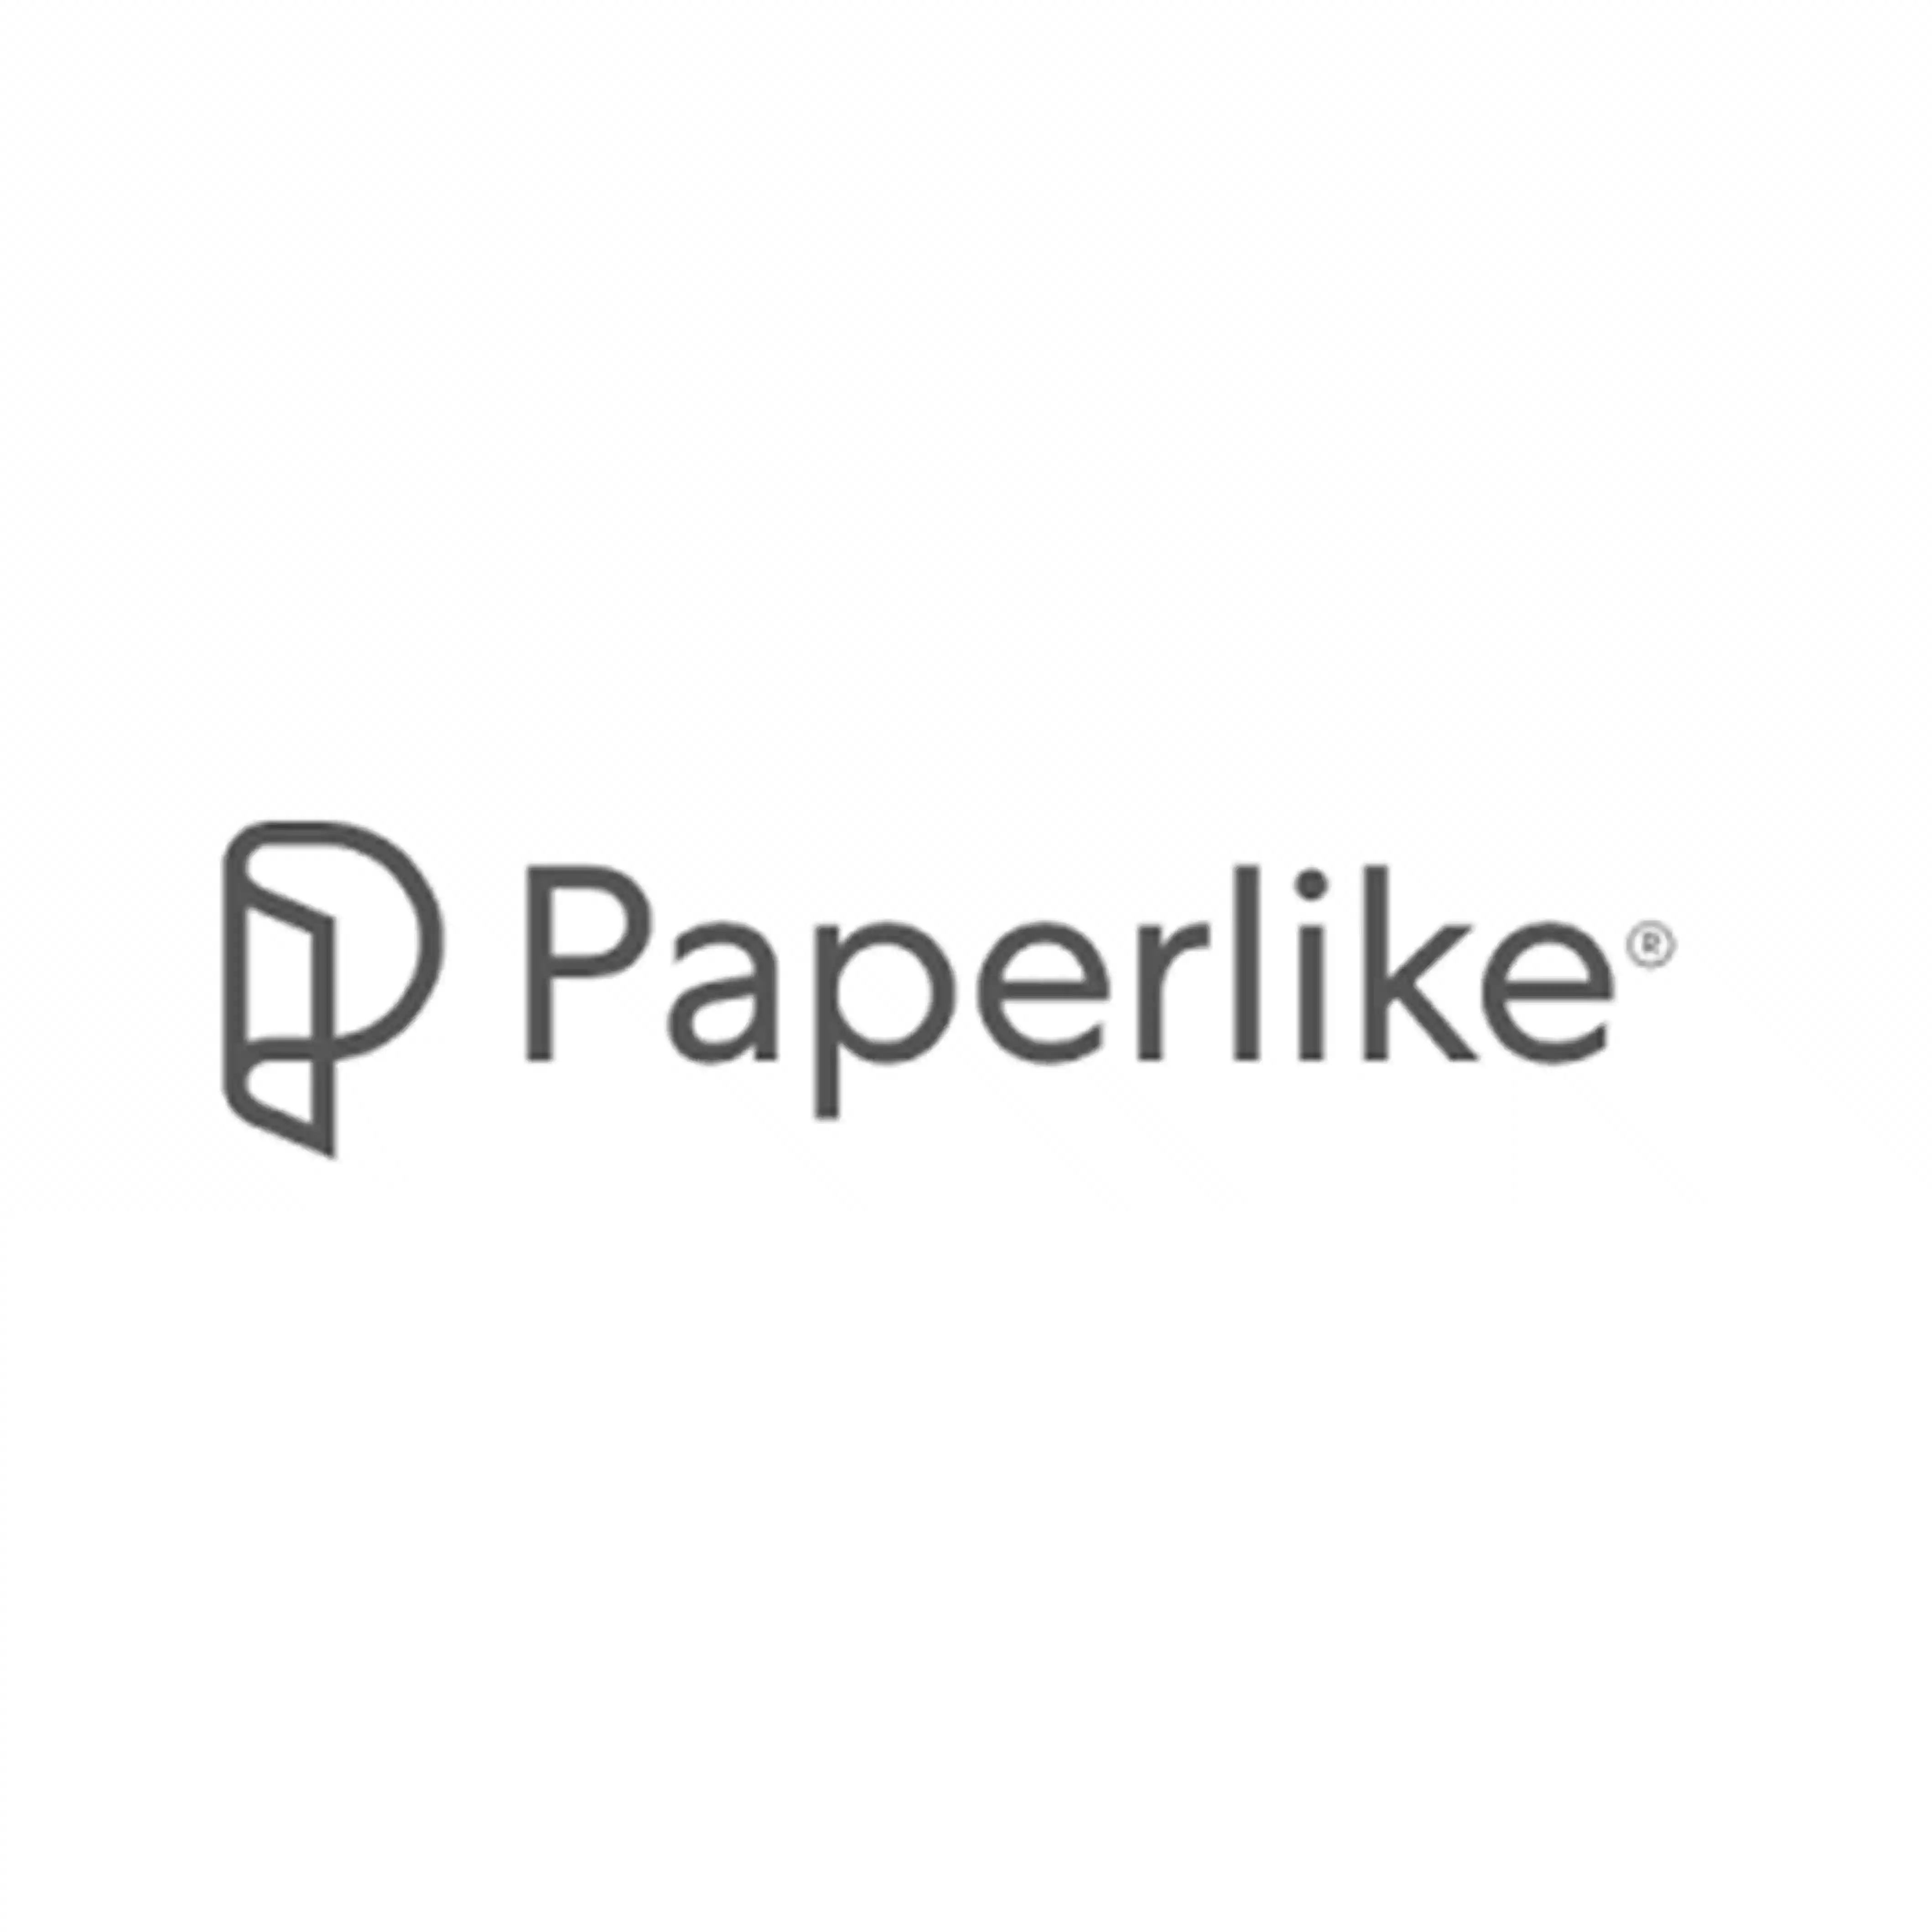 PaperLike